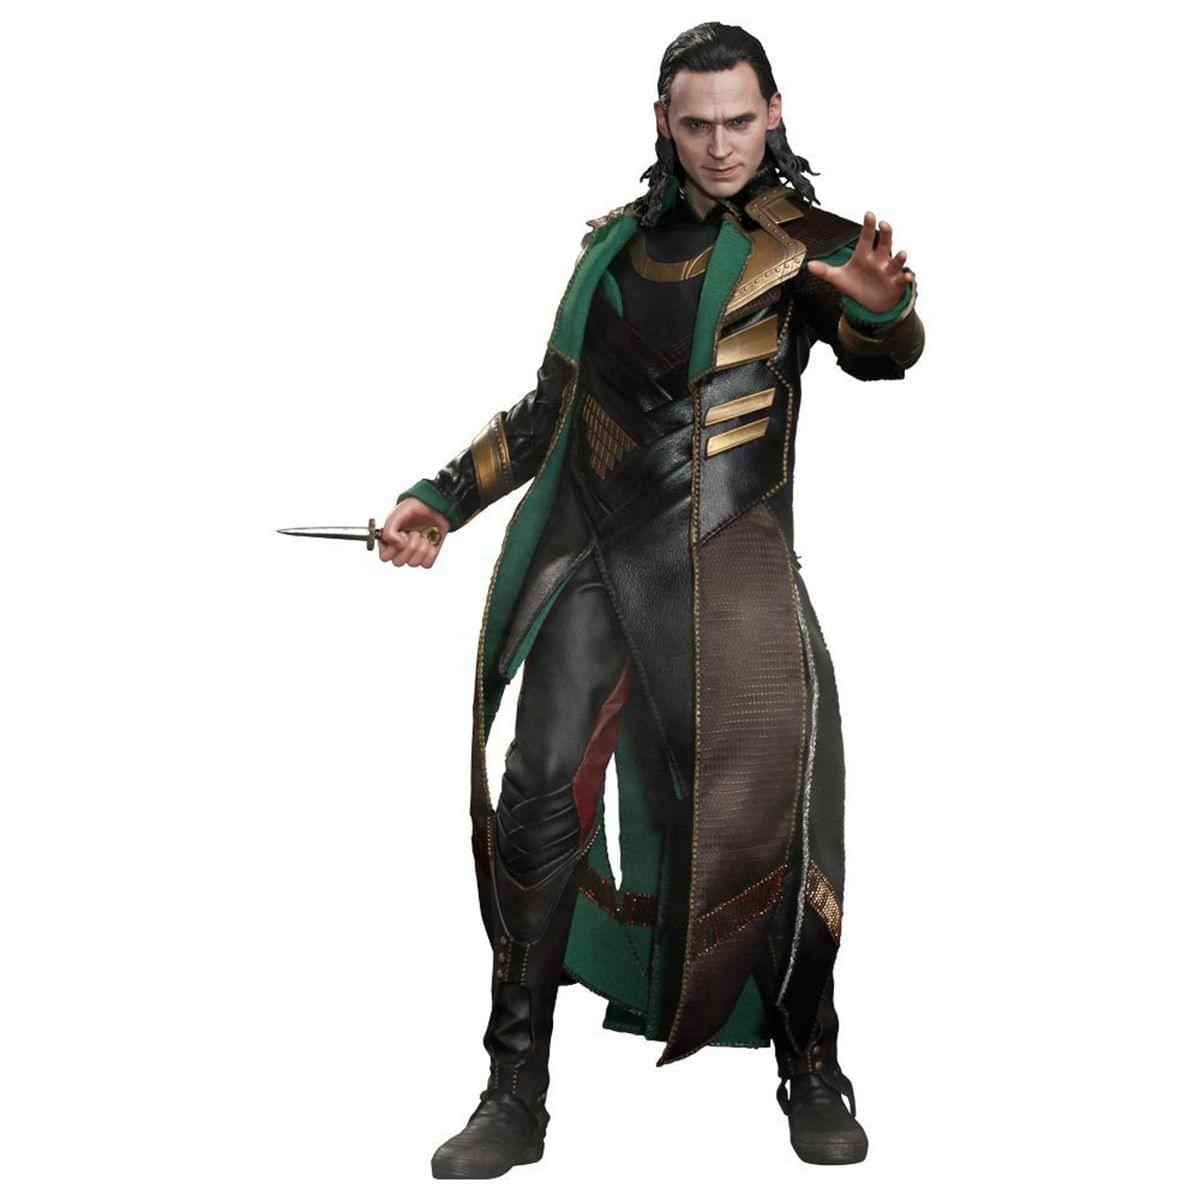 Thor The Dark World Loki 1:6 Scale Hot Toys Figure